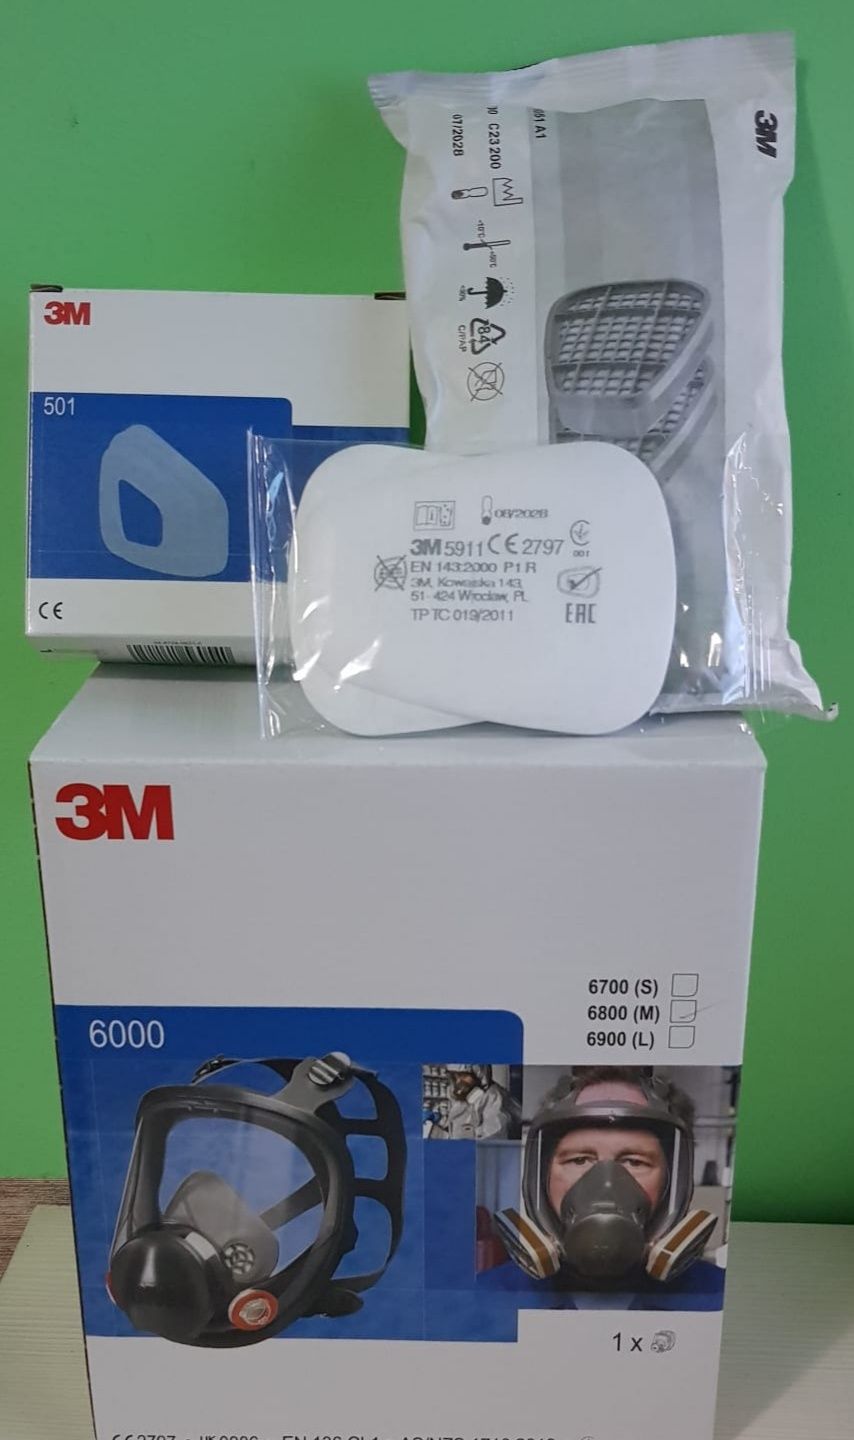 Masca de protectie 3M 6800 + filtre prefiltre capace = 500 lei